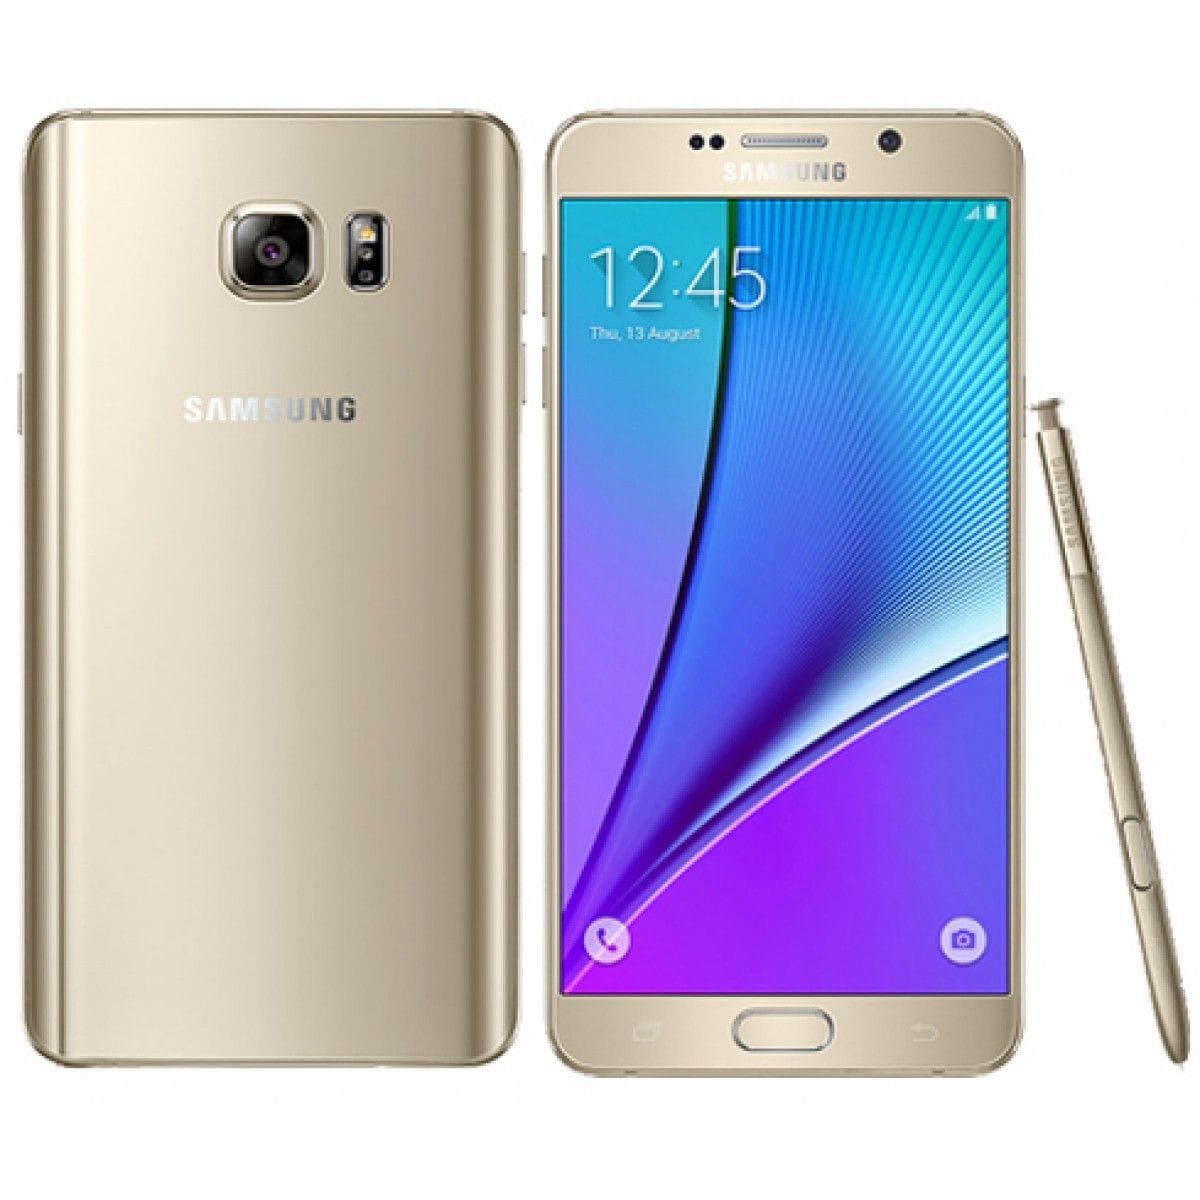 Samsung Galaxy Note5 - 32 GB - Platinum Gold - AT&T - GSM